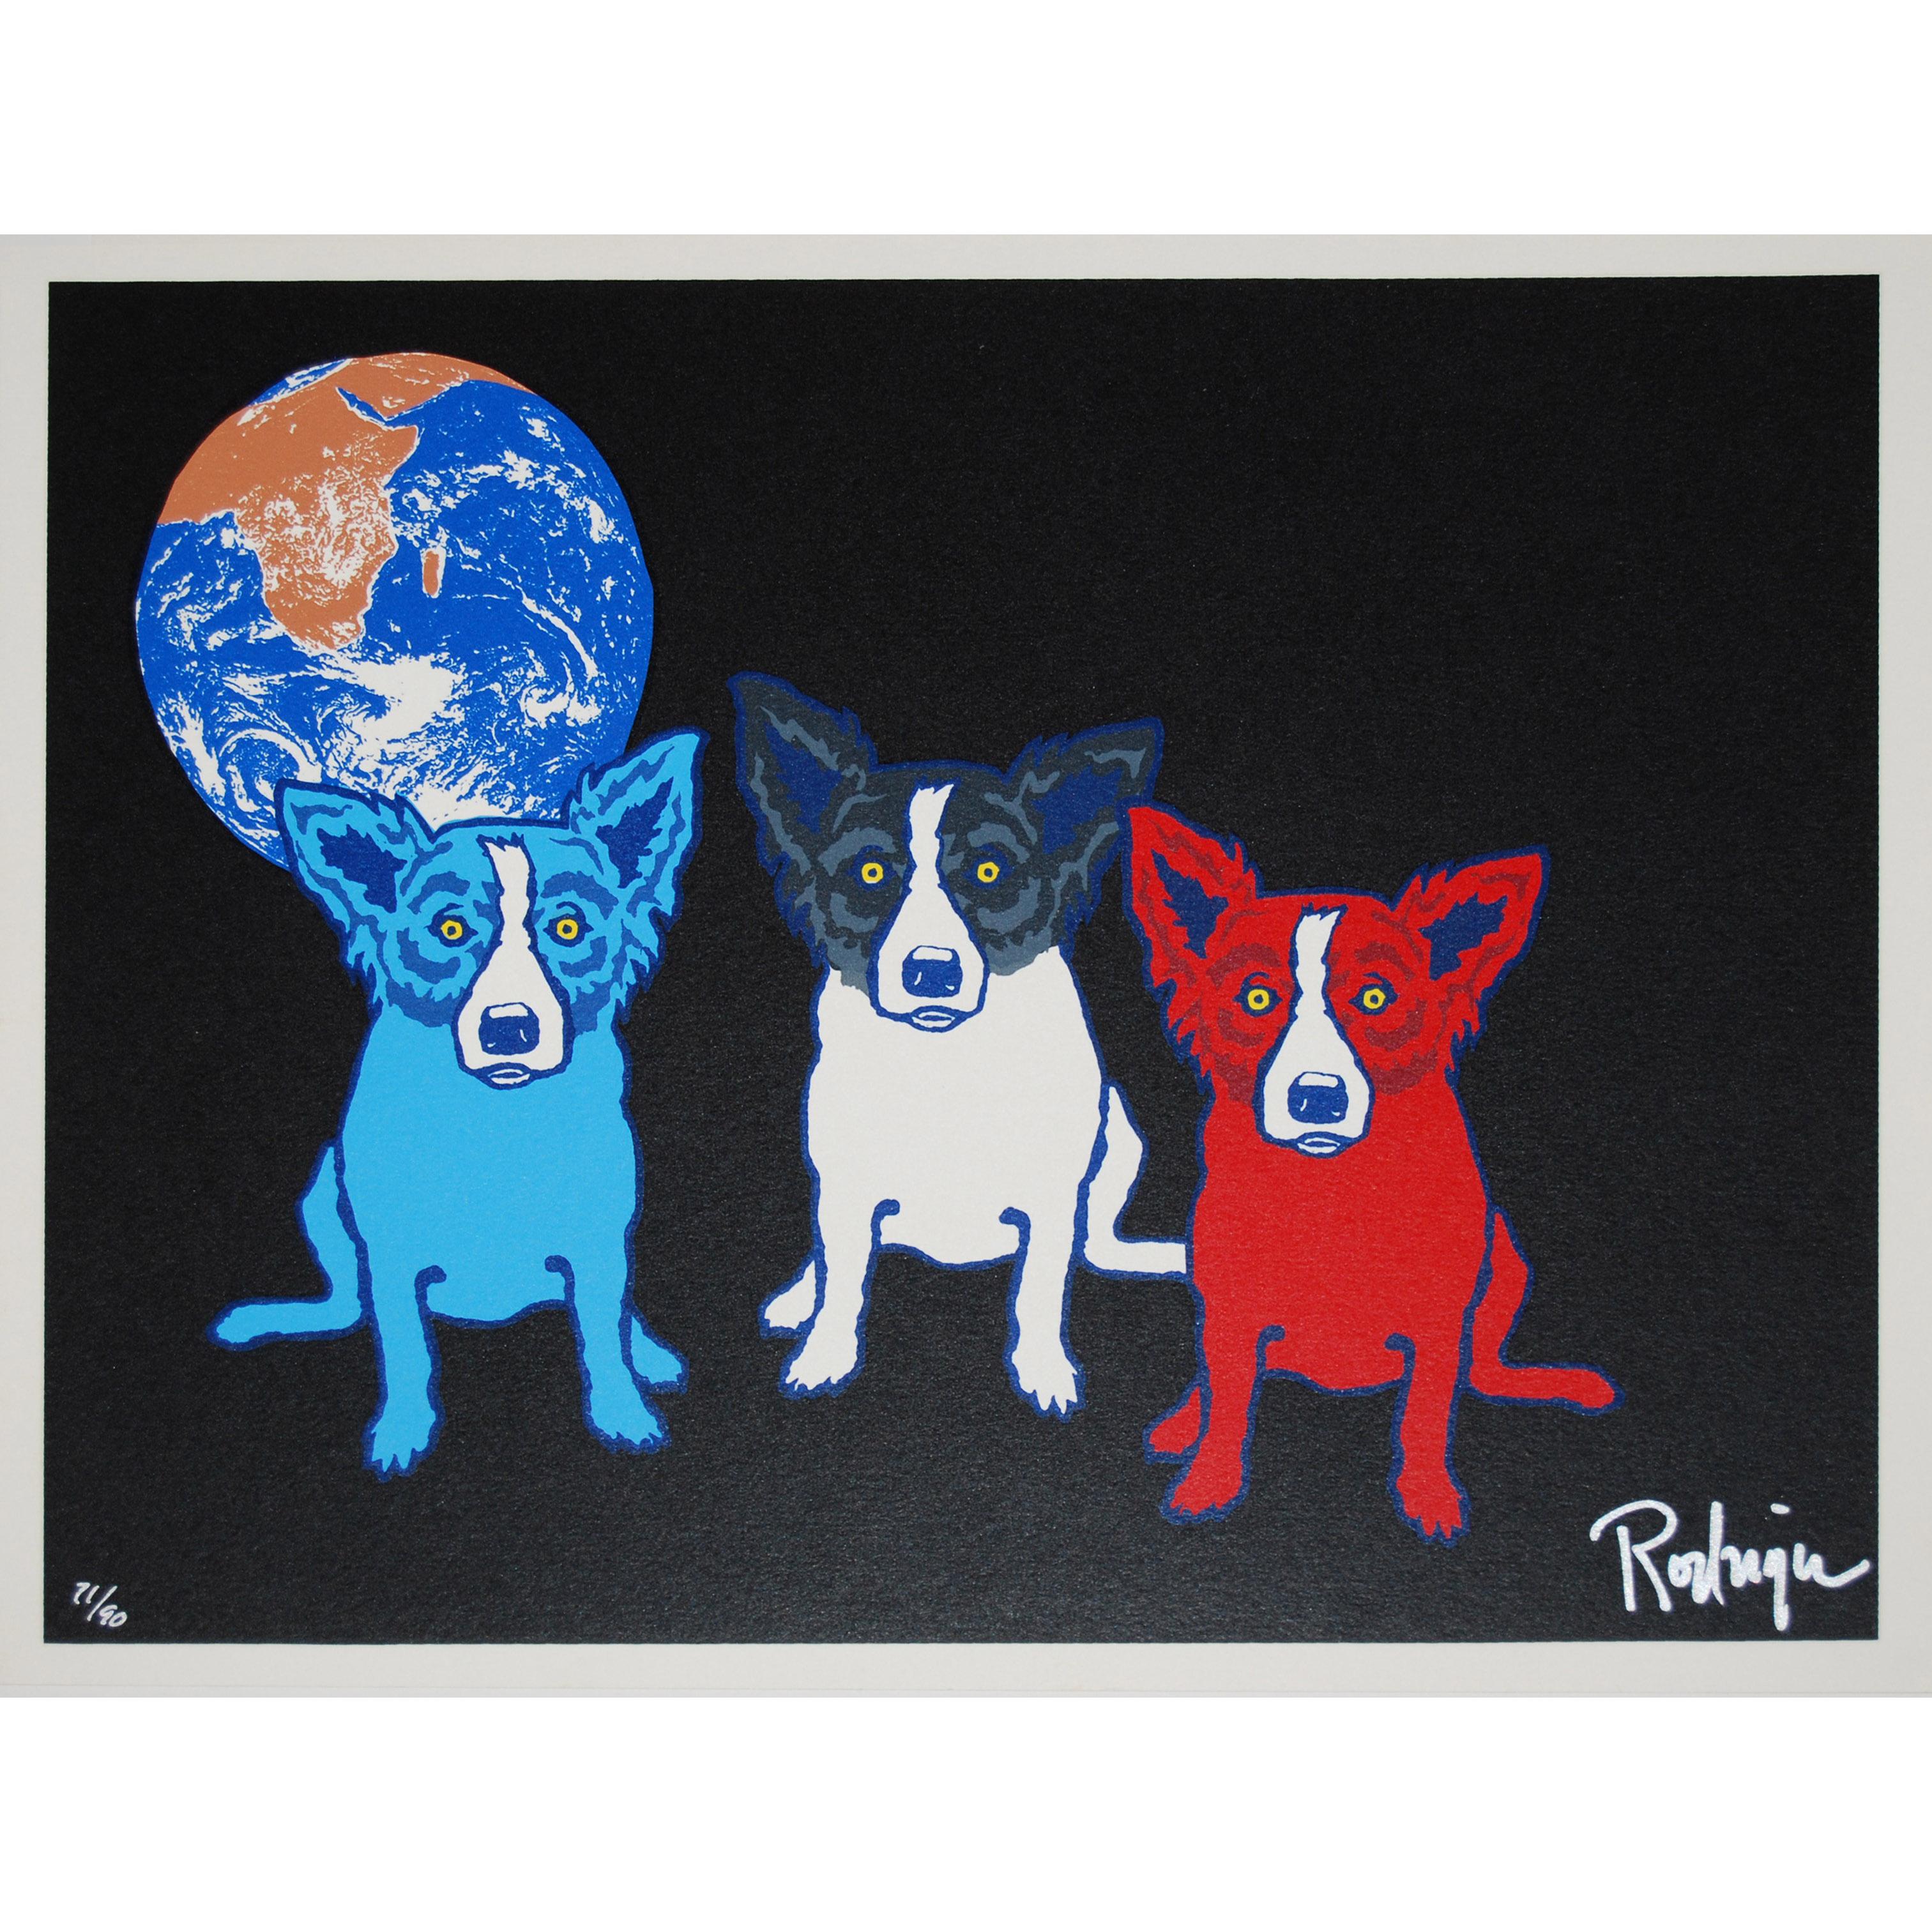 George Rodrigue Animal Print – Looking For the Moon – Blauer Seidendruck mit blauem Hund